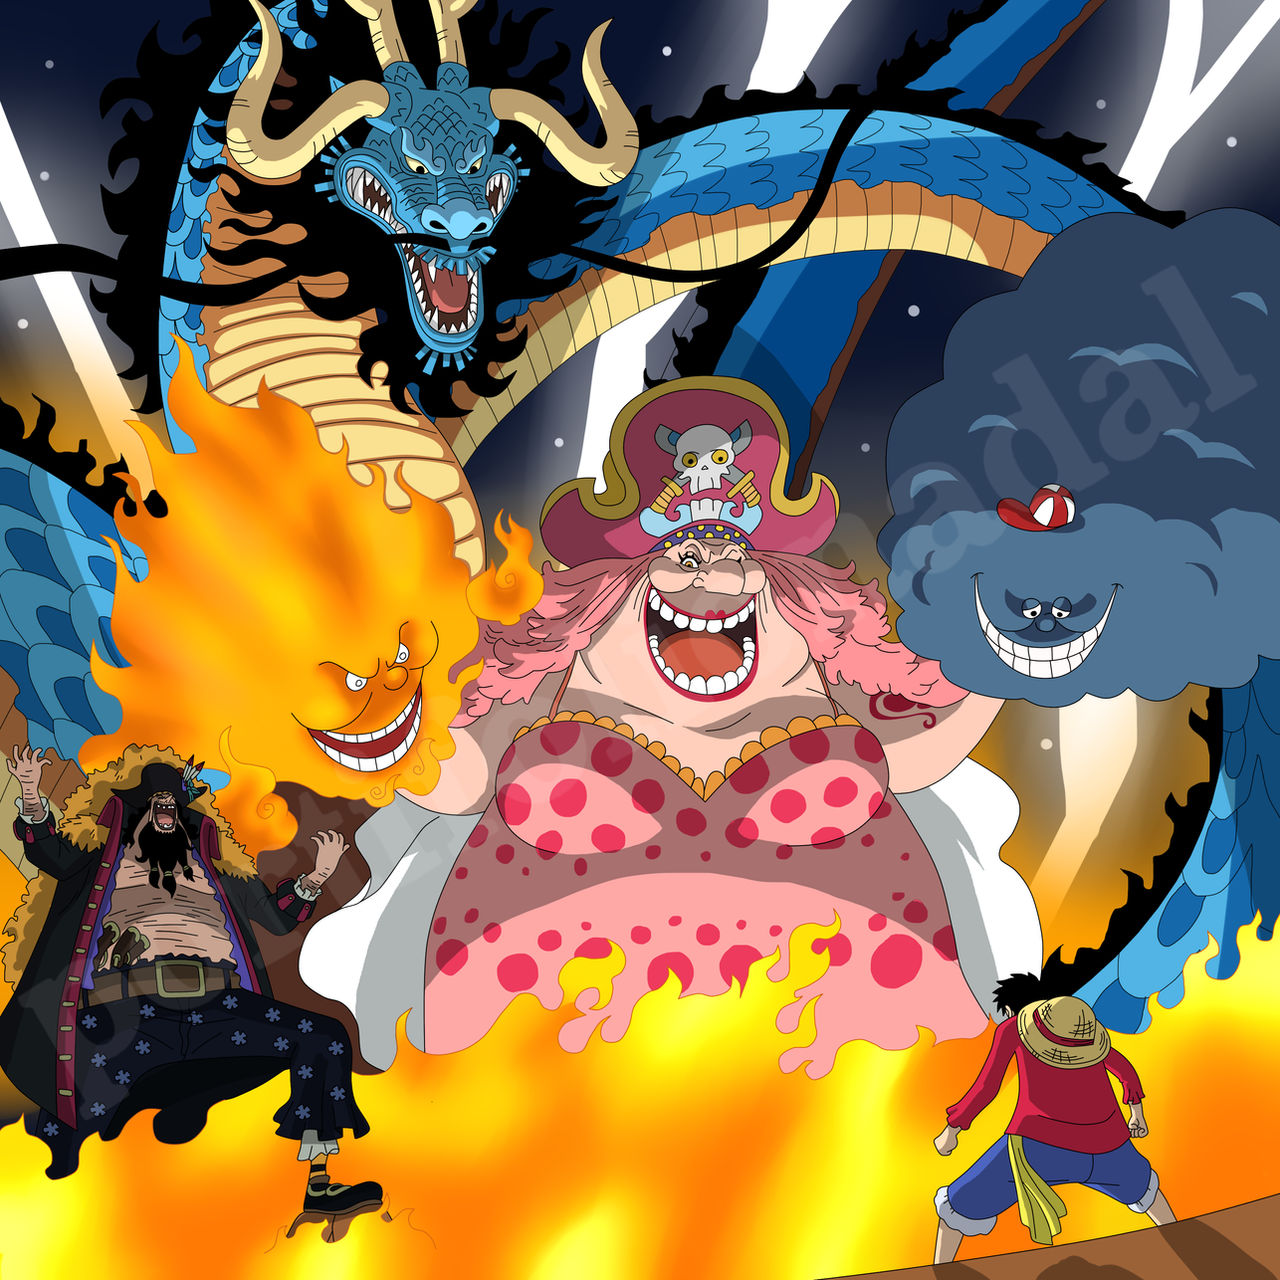 Luffy vs Big Mom, Kaido and Marshal D. Teach by caiquenadal on DeviantArt